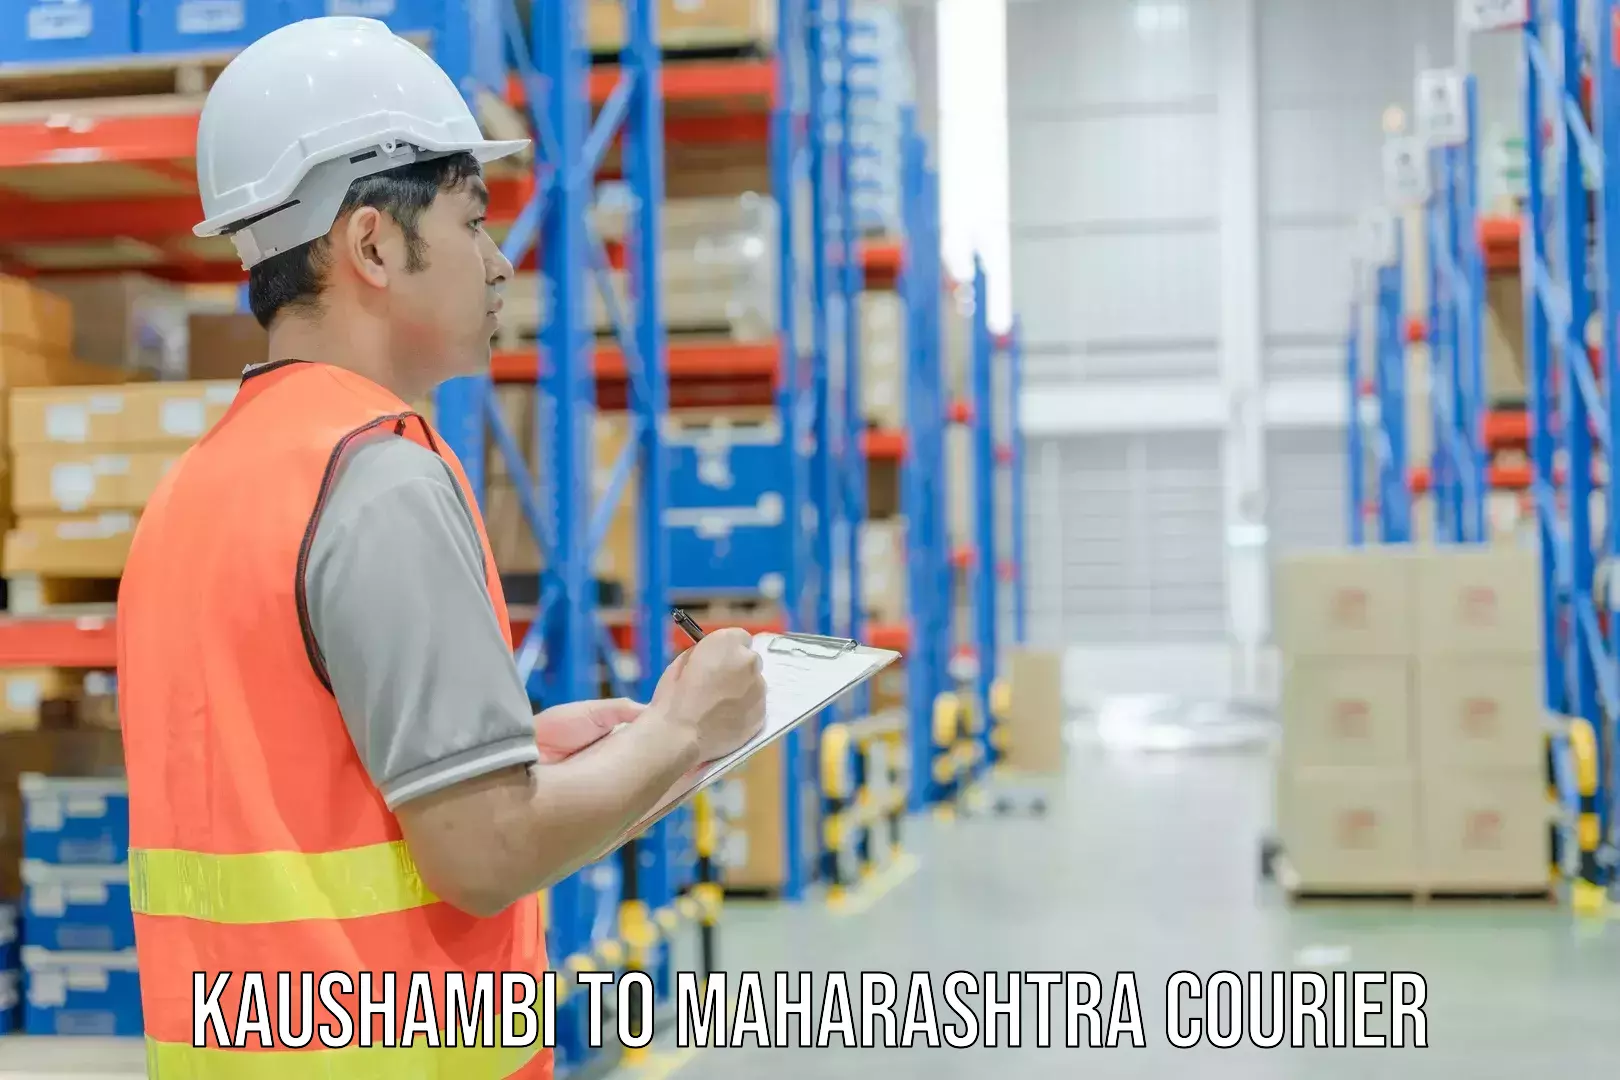 Flexible delivery schedules Kaushambi to Nagpur